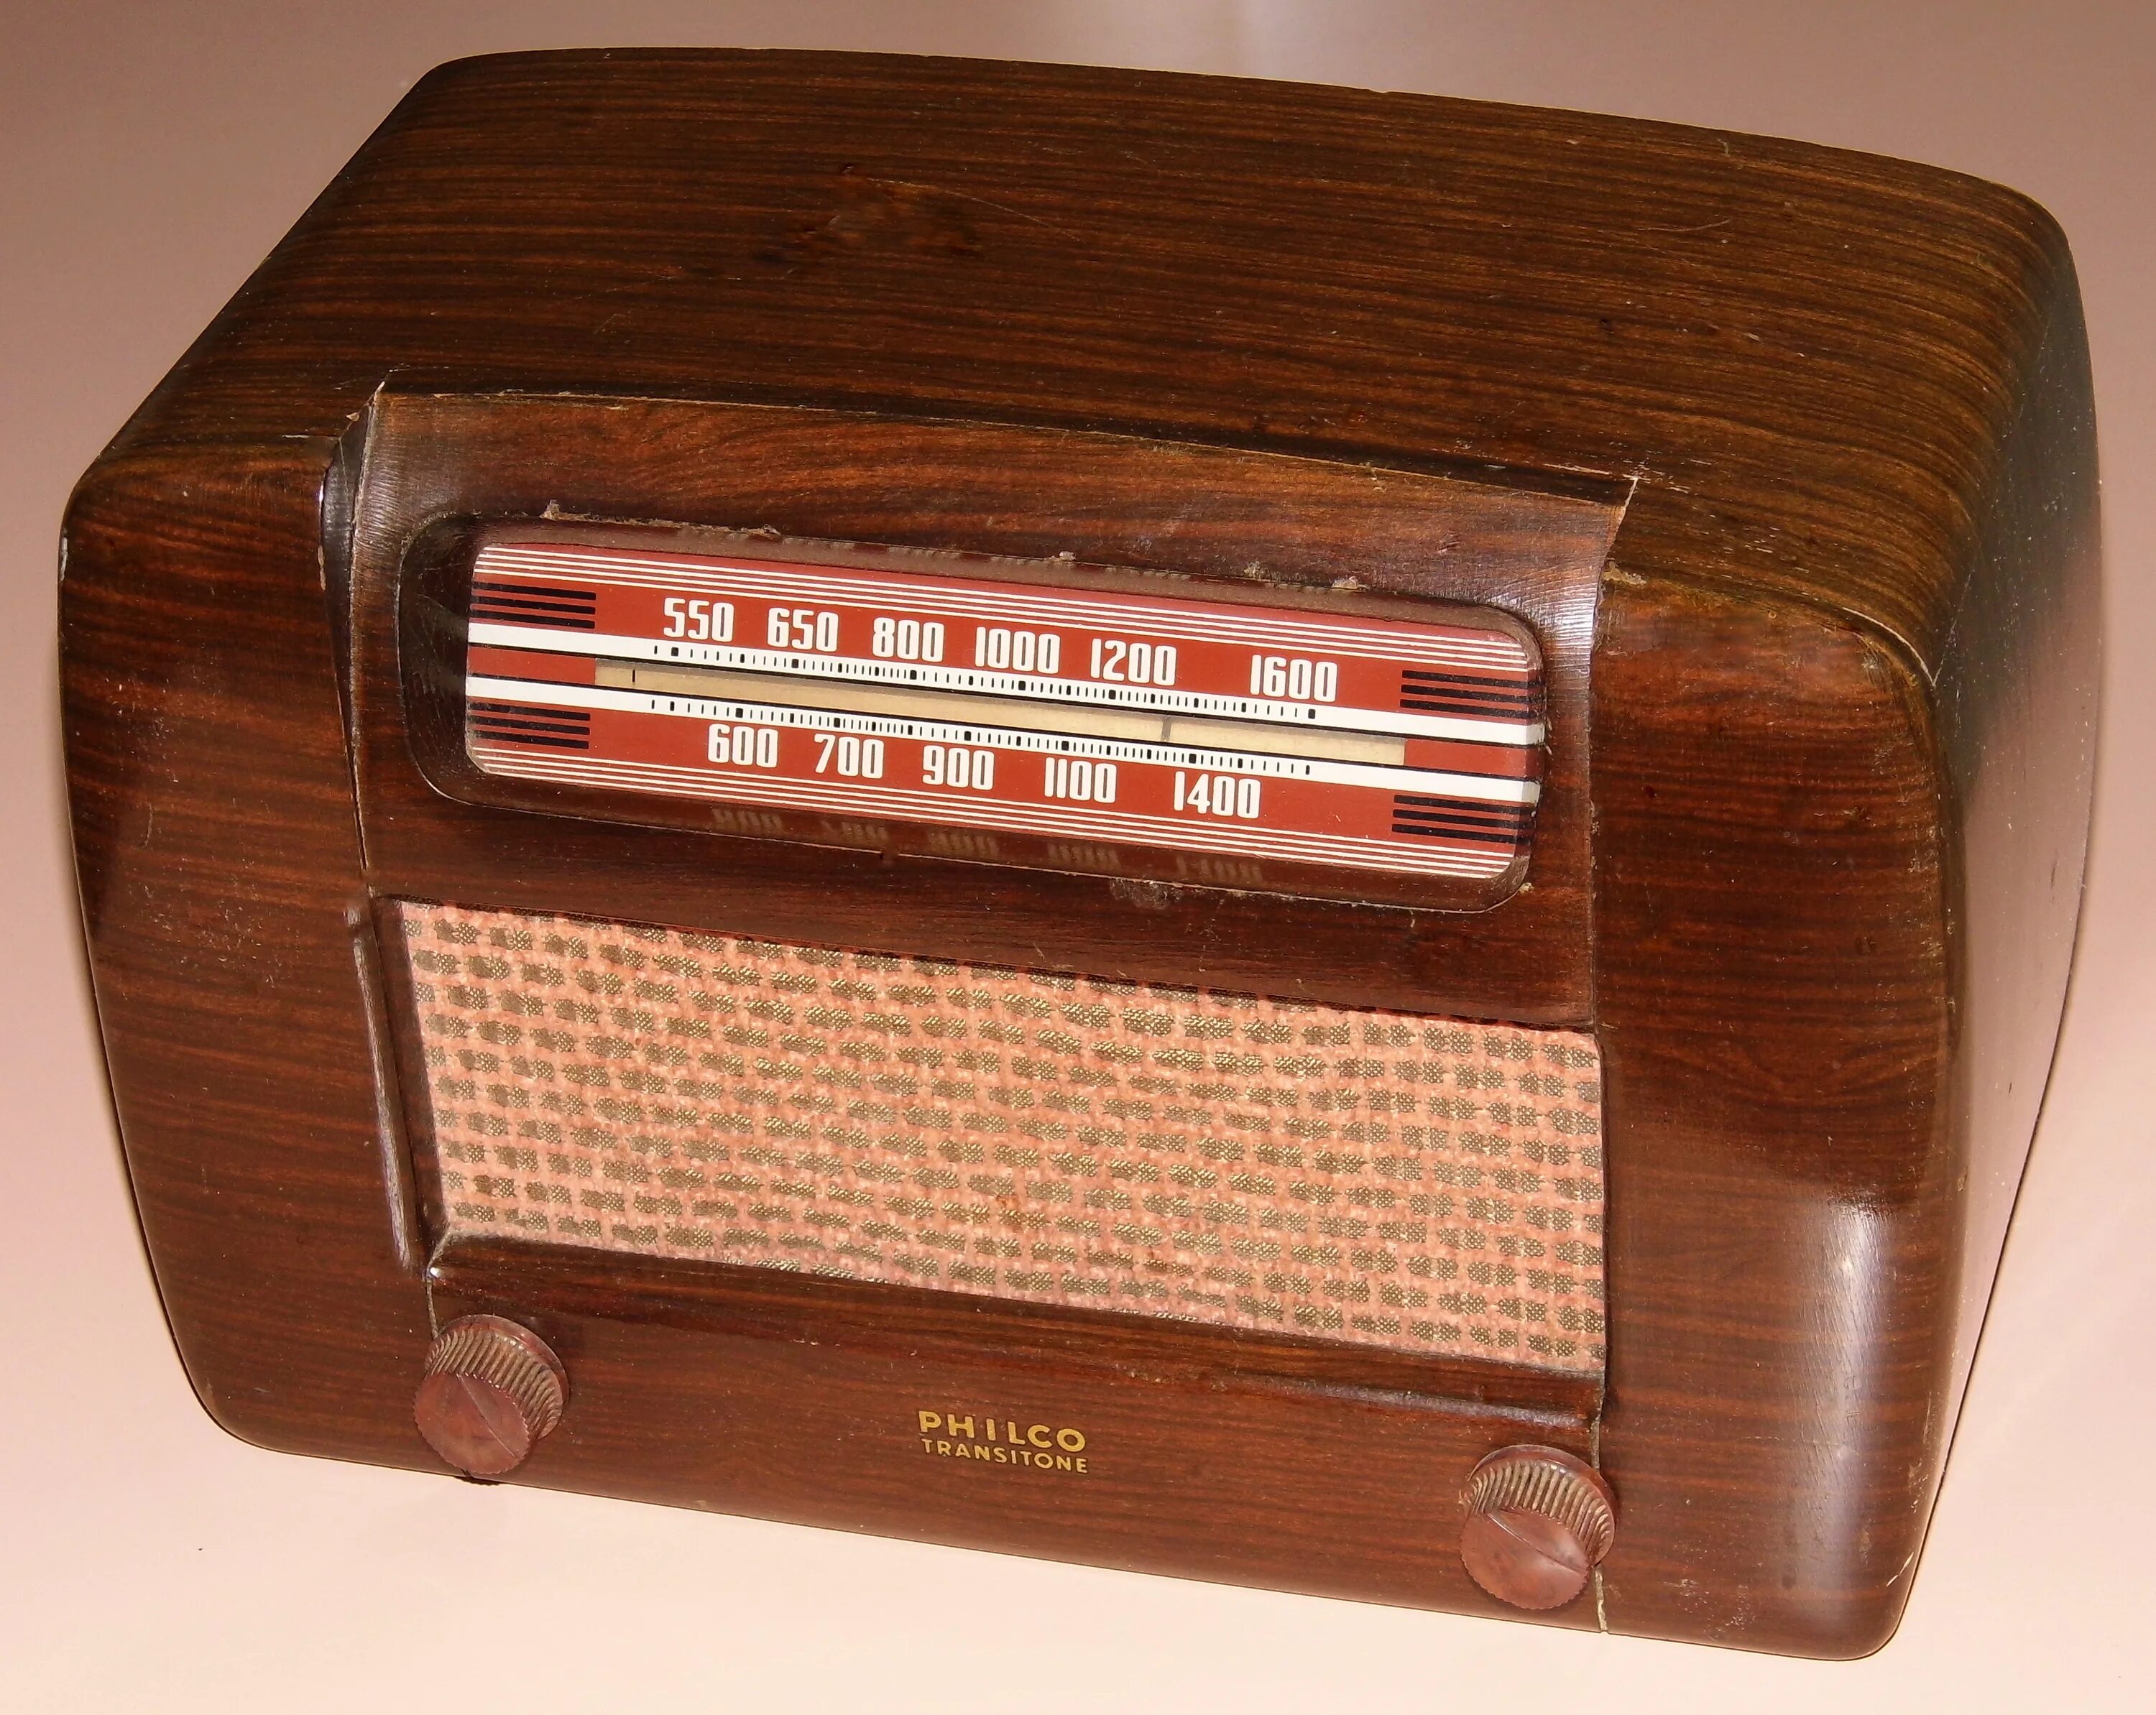 Philco радиоприемники. Радиоприемник Бригантина. Радиоприемник Carmen. Радио 1900 Philco. Radio model